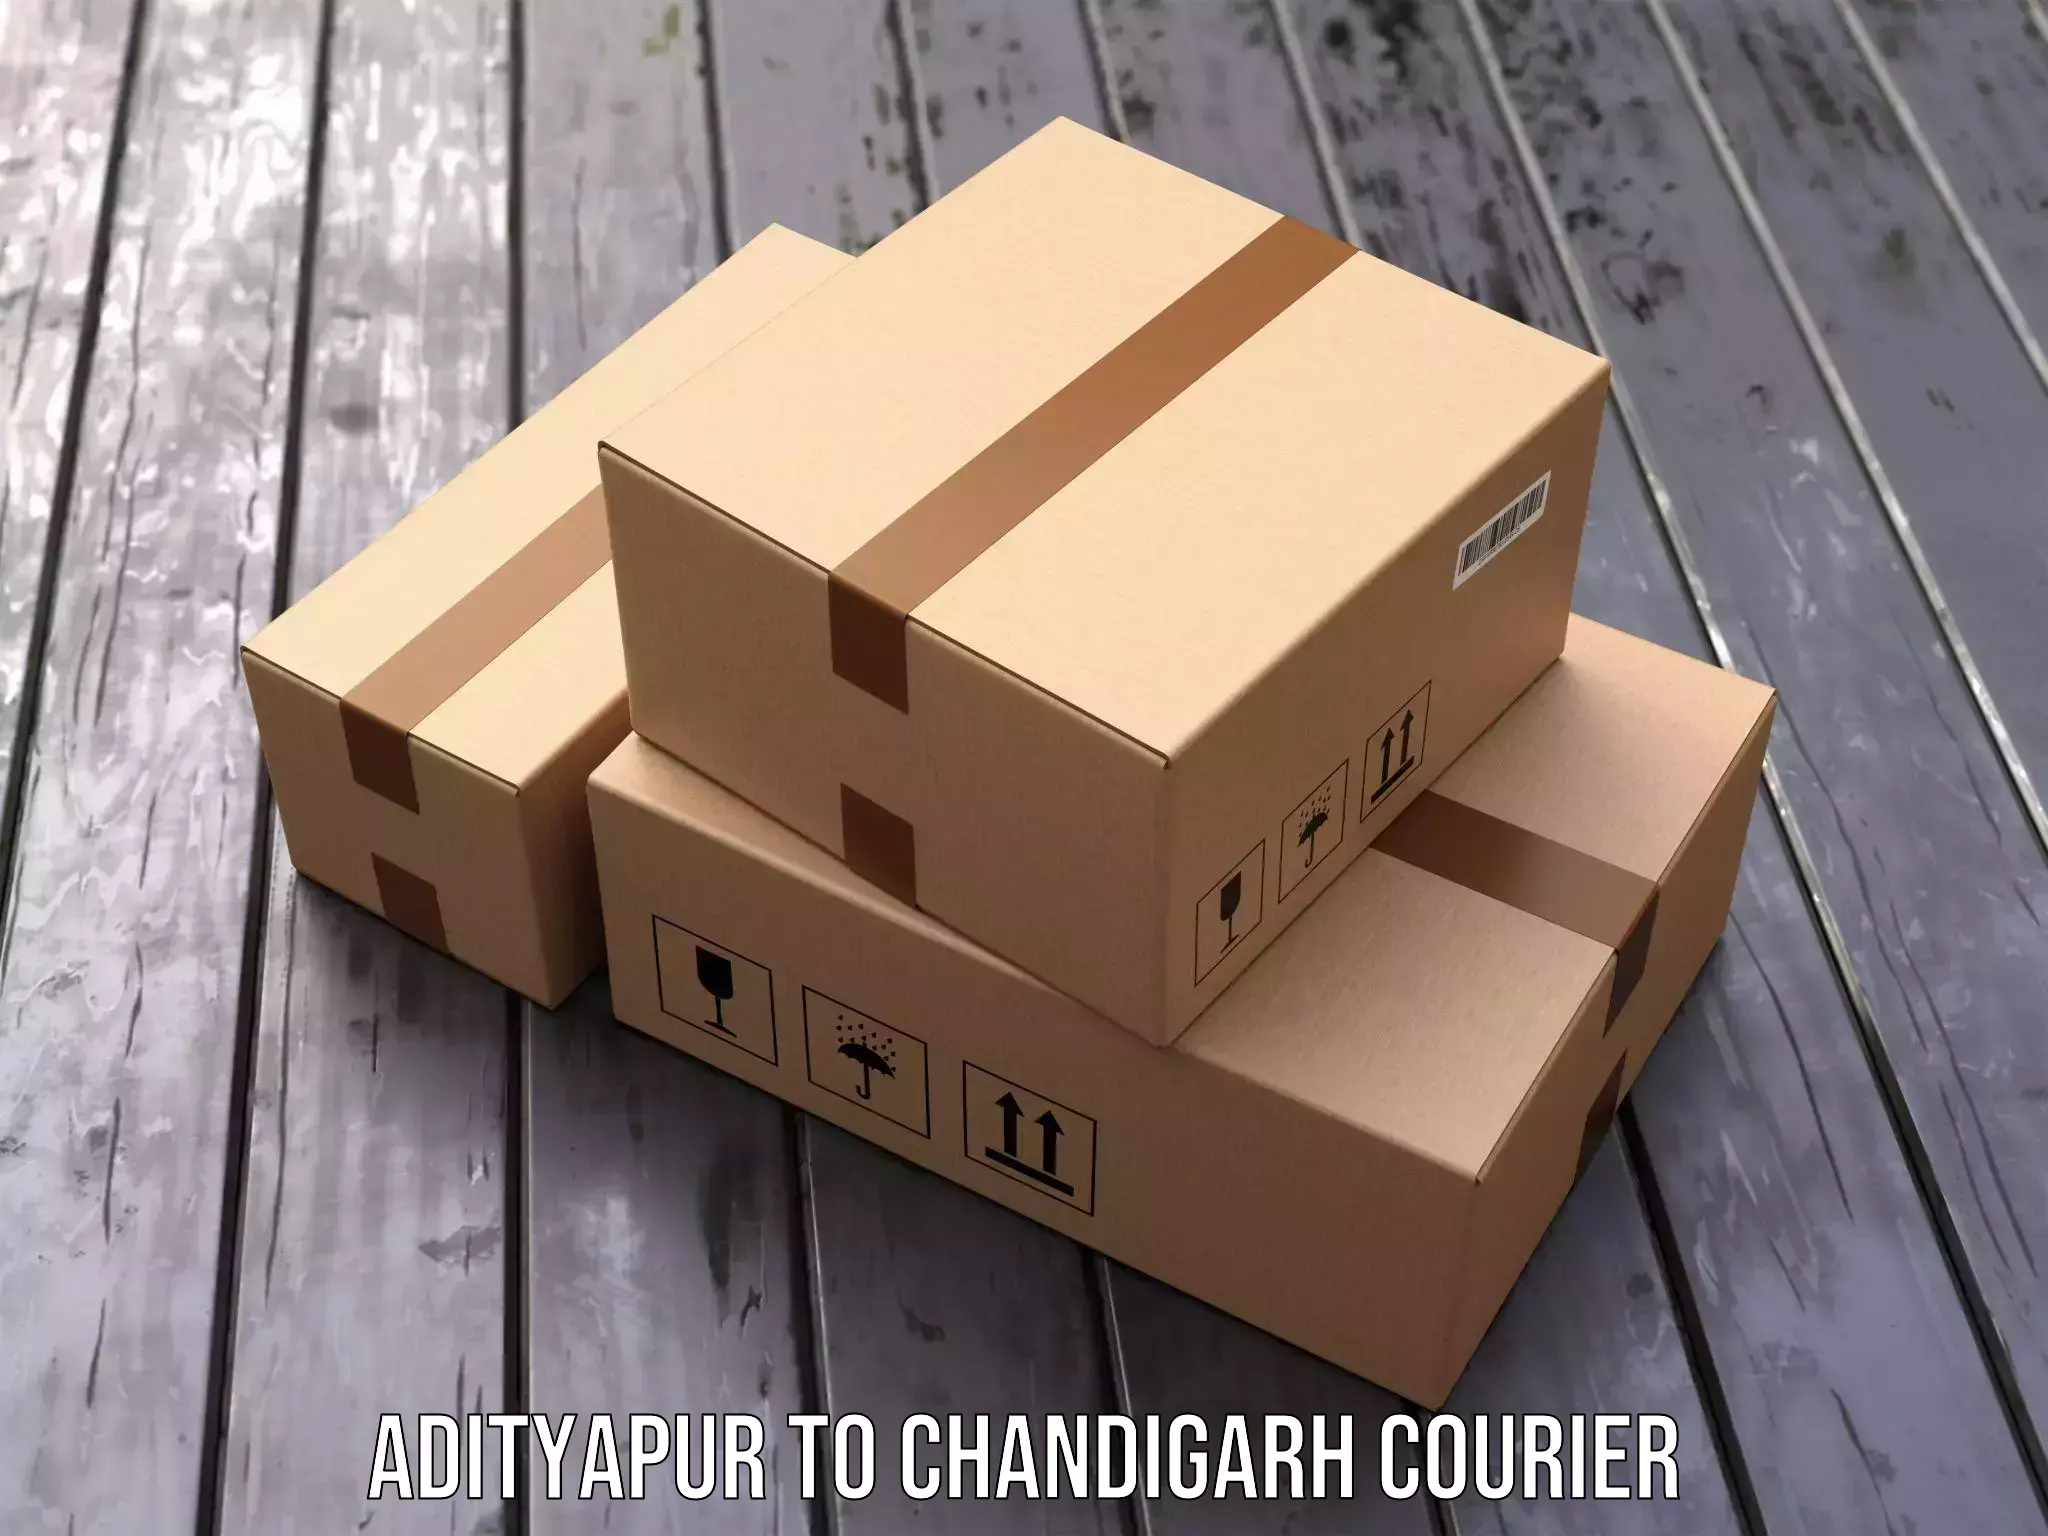 Courier service comparison Adityapur to Chandigarh